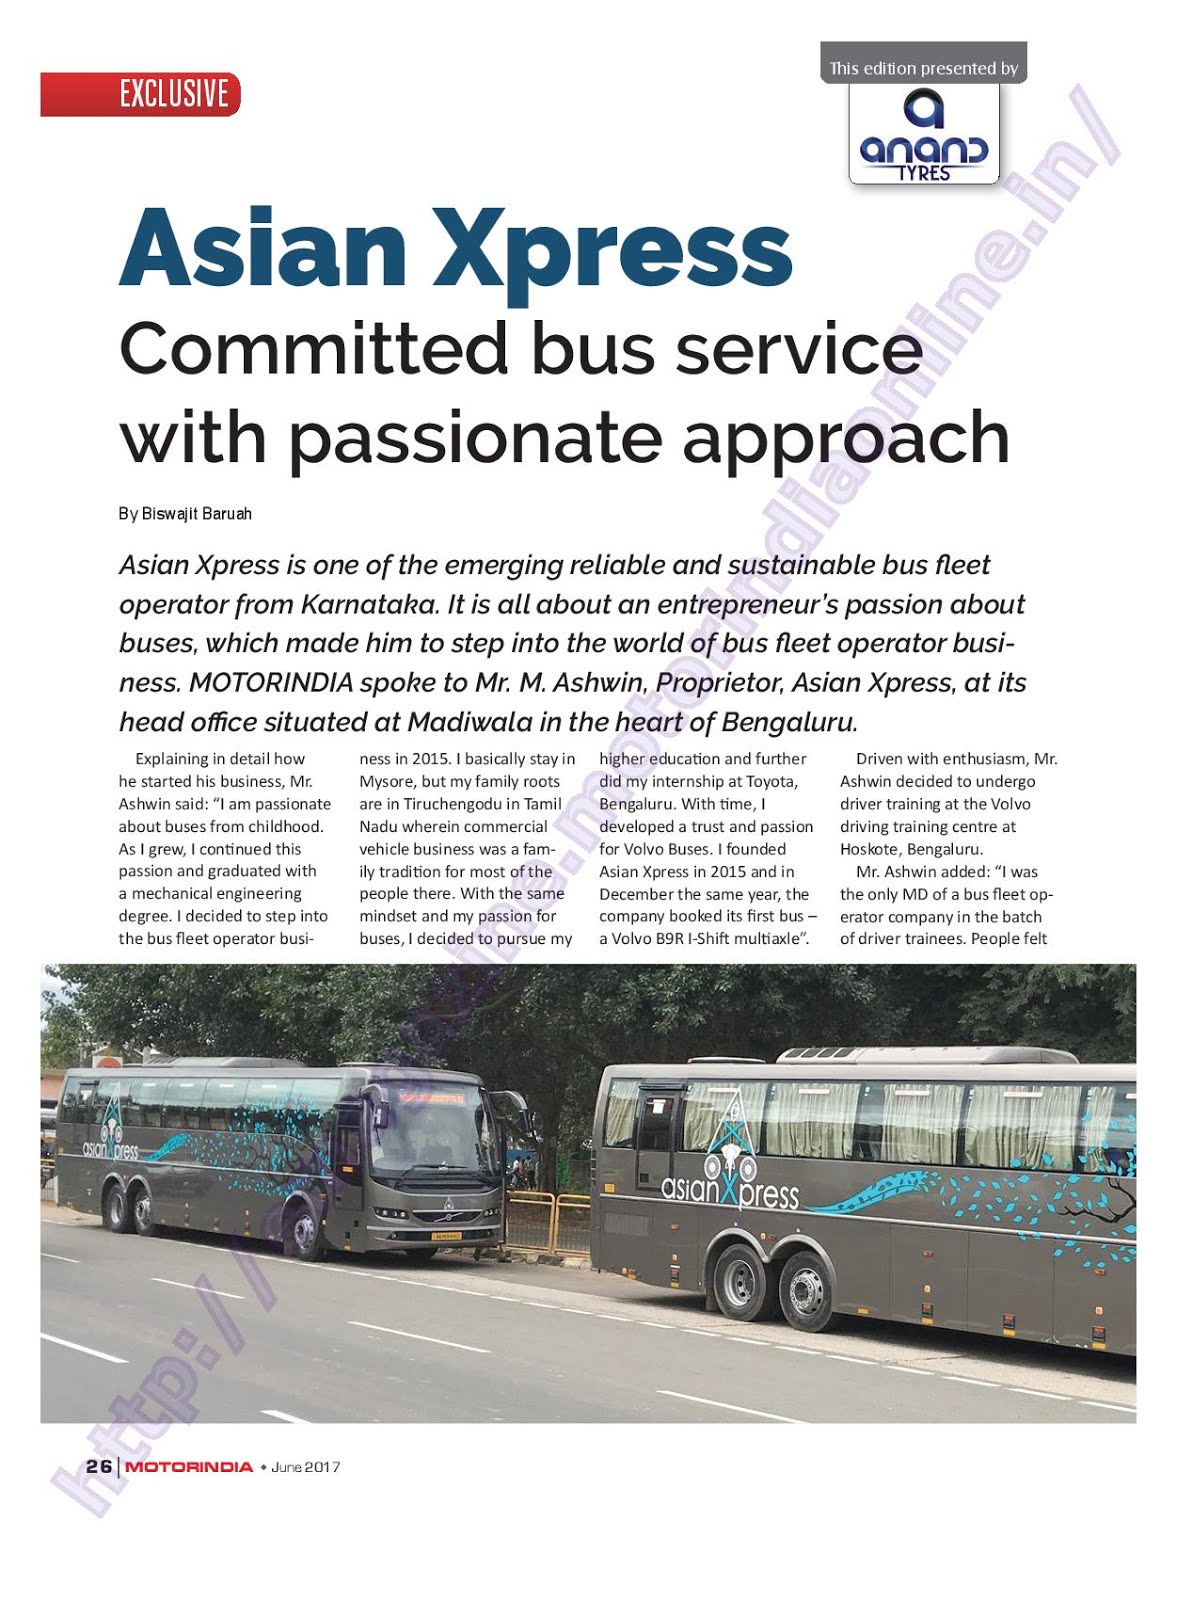 MOTOR INDIA ARTICLE 12 : ASIAN XPRESS